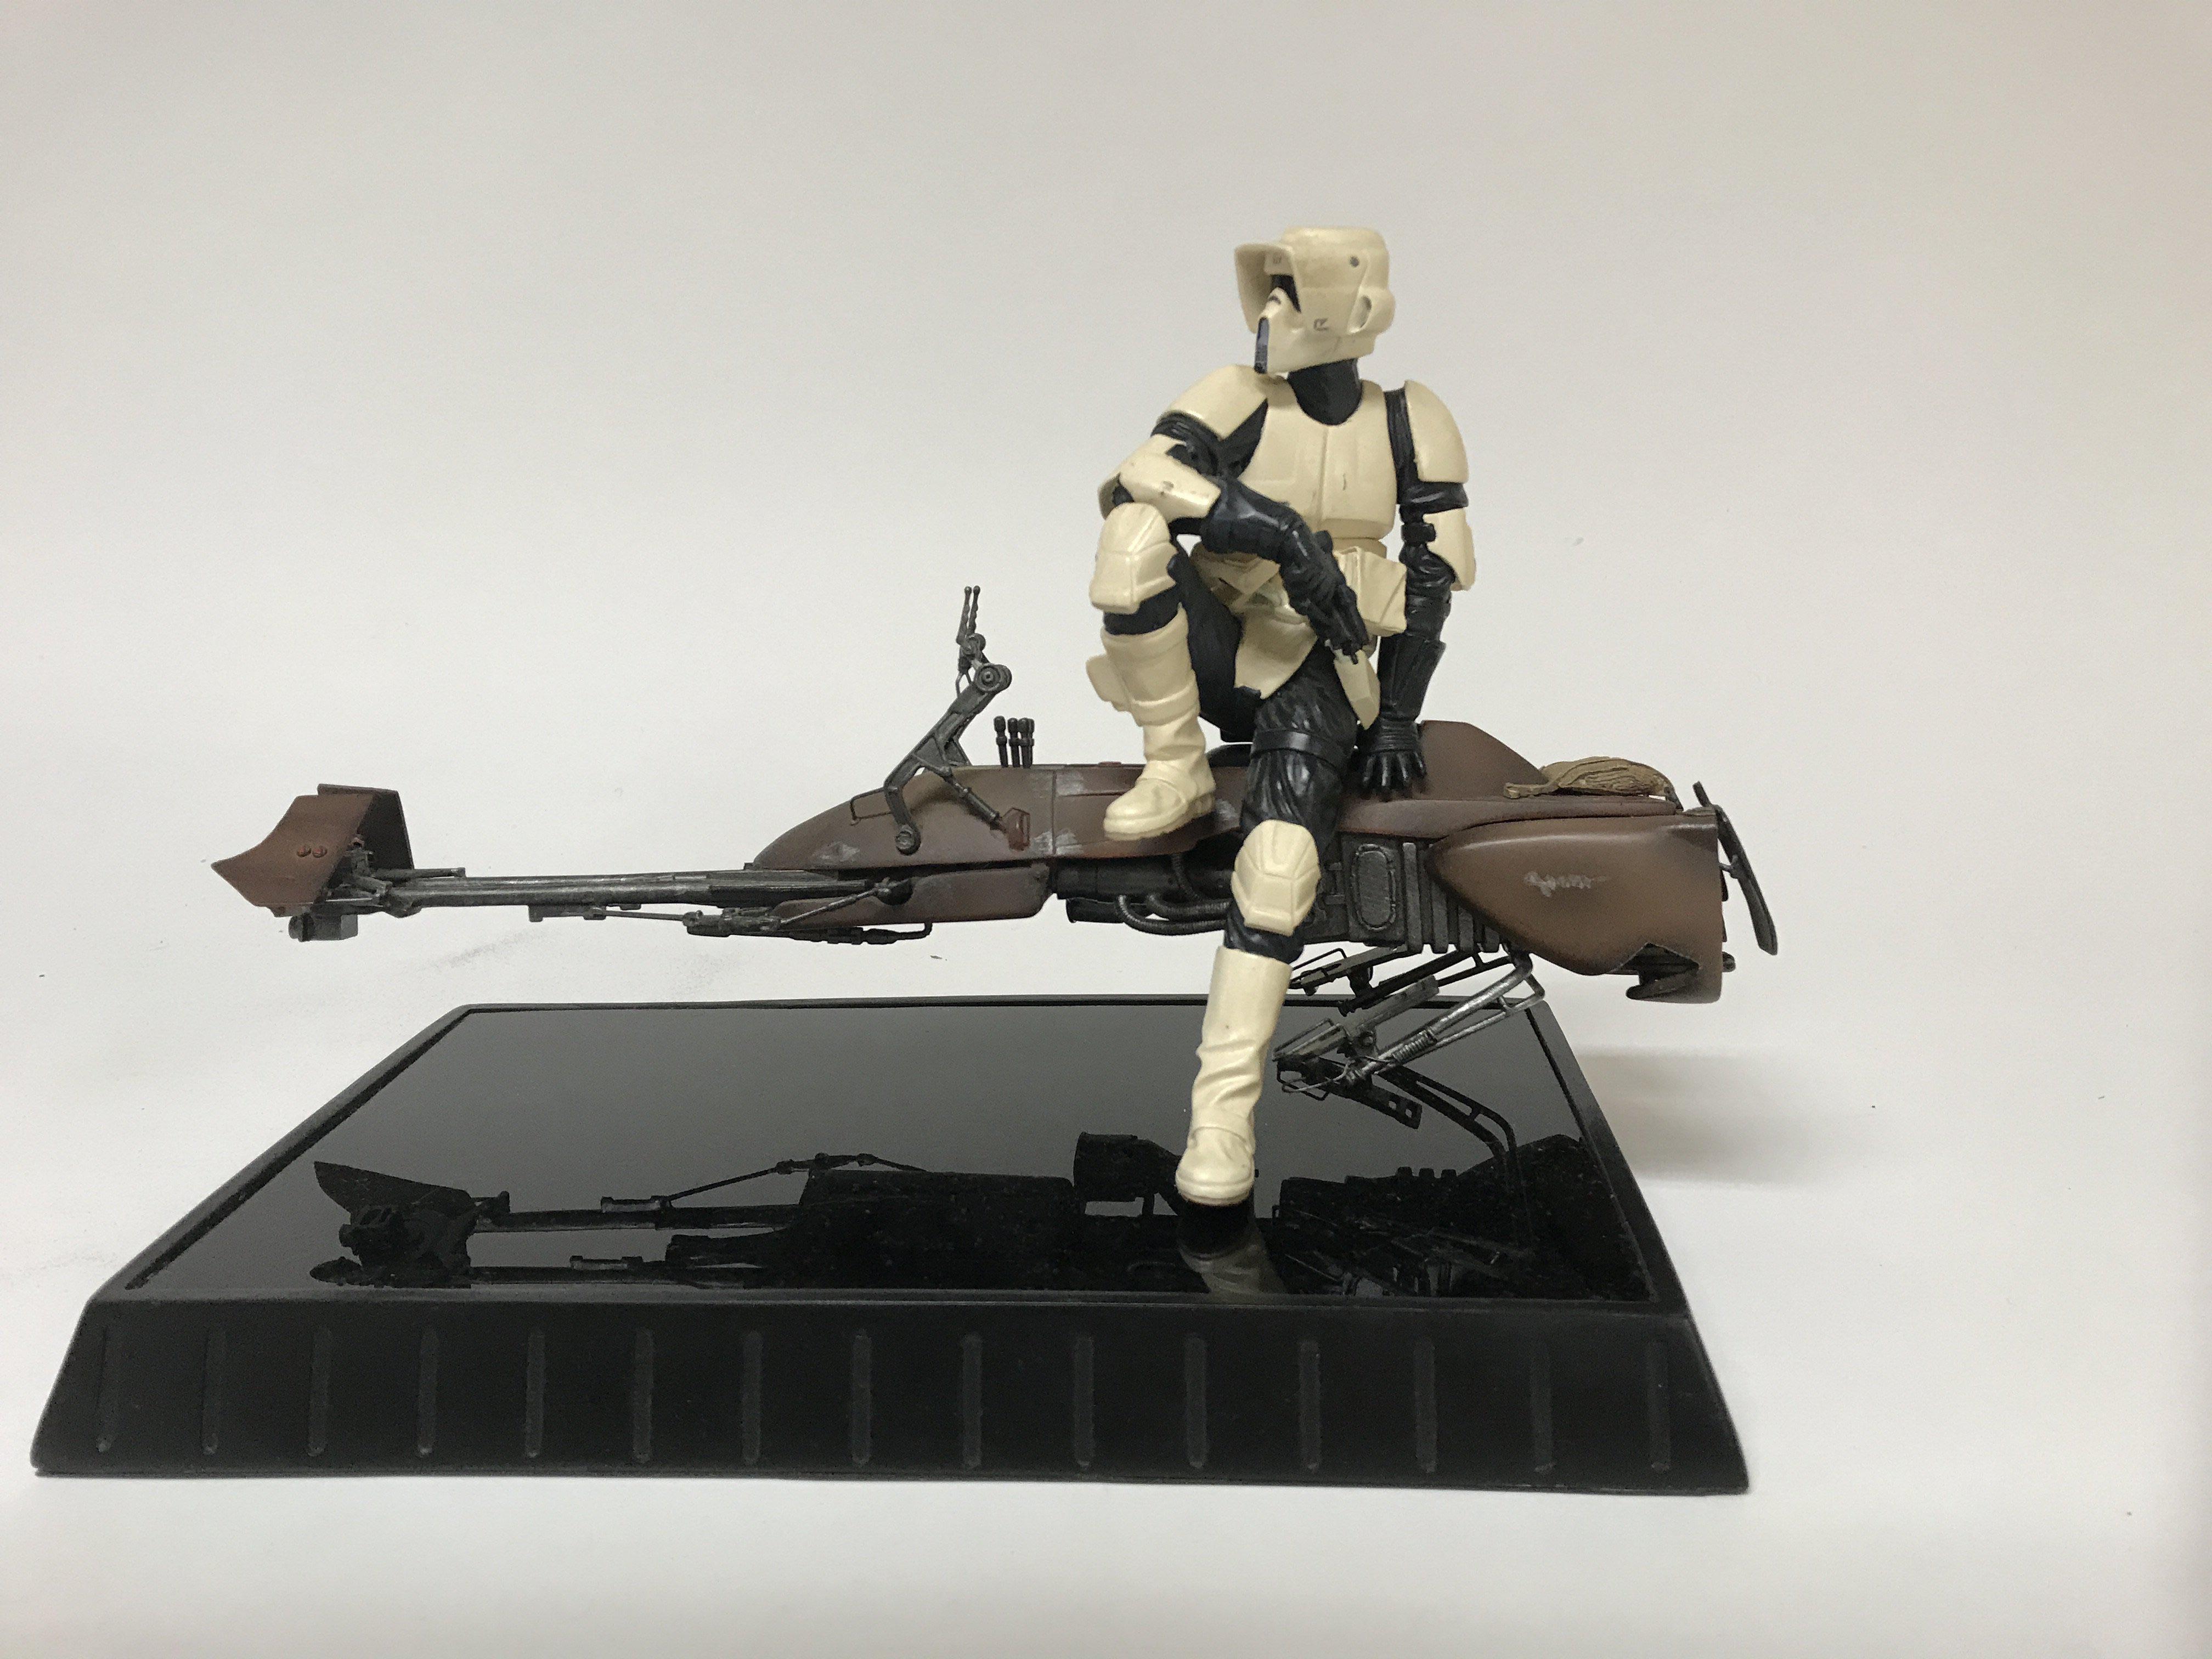 A Star Wars Scout Troooper and Speeder Bike statue